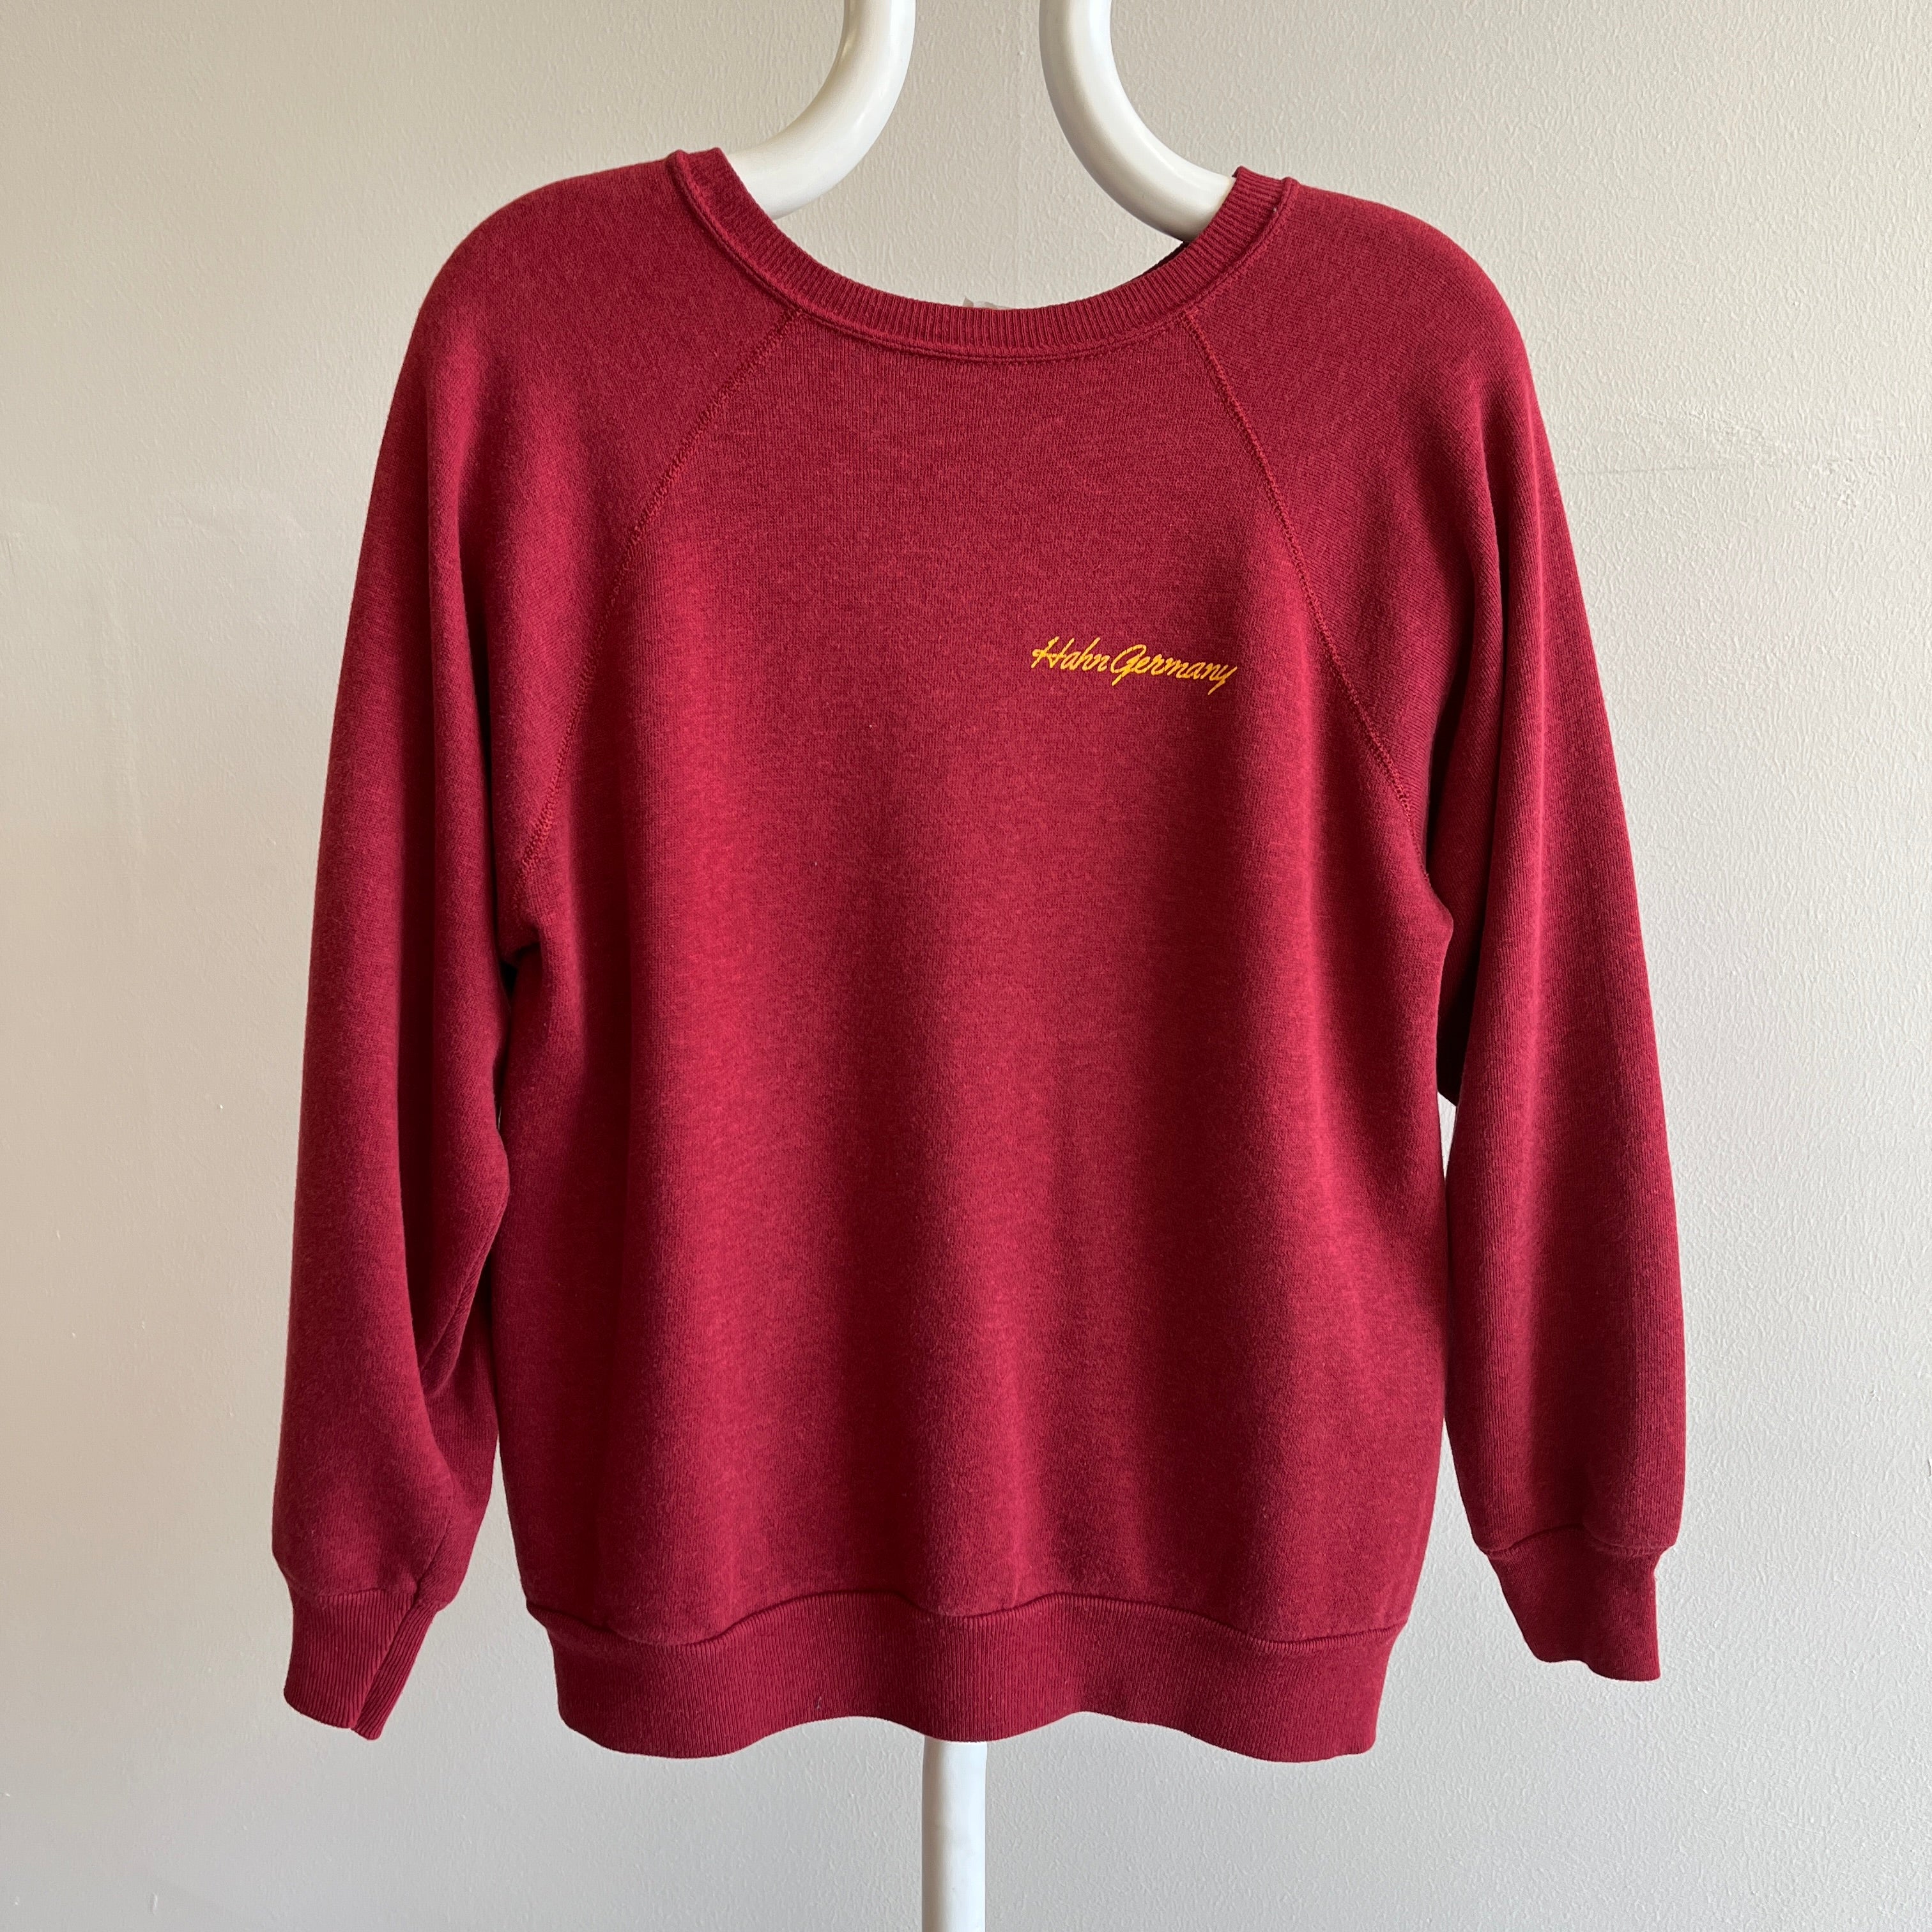 1980s Hahn Germany Super Soft Sweatshirt by Artex